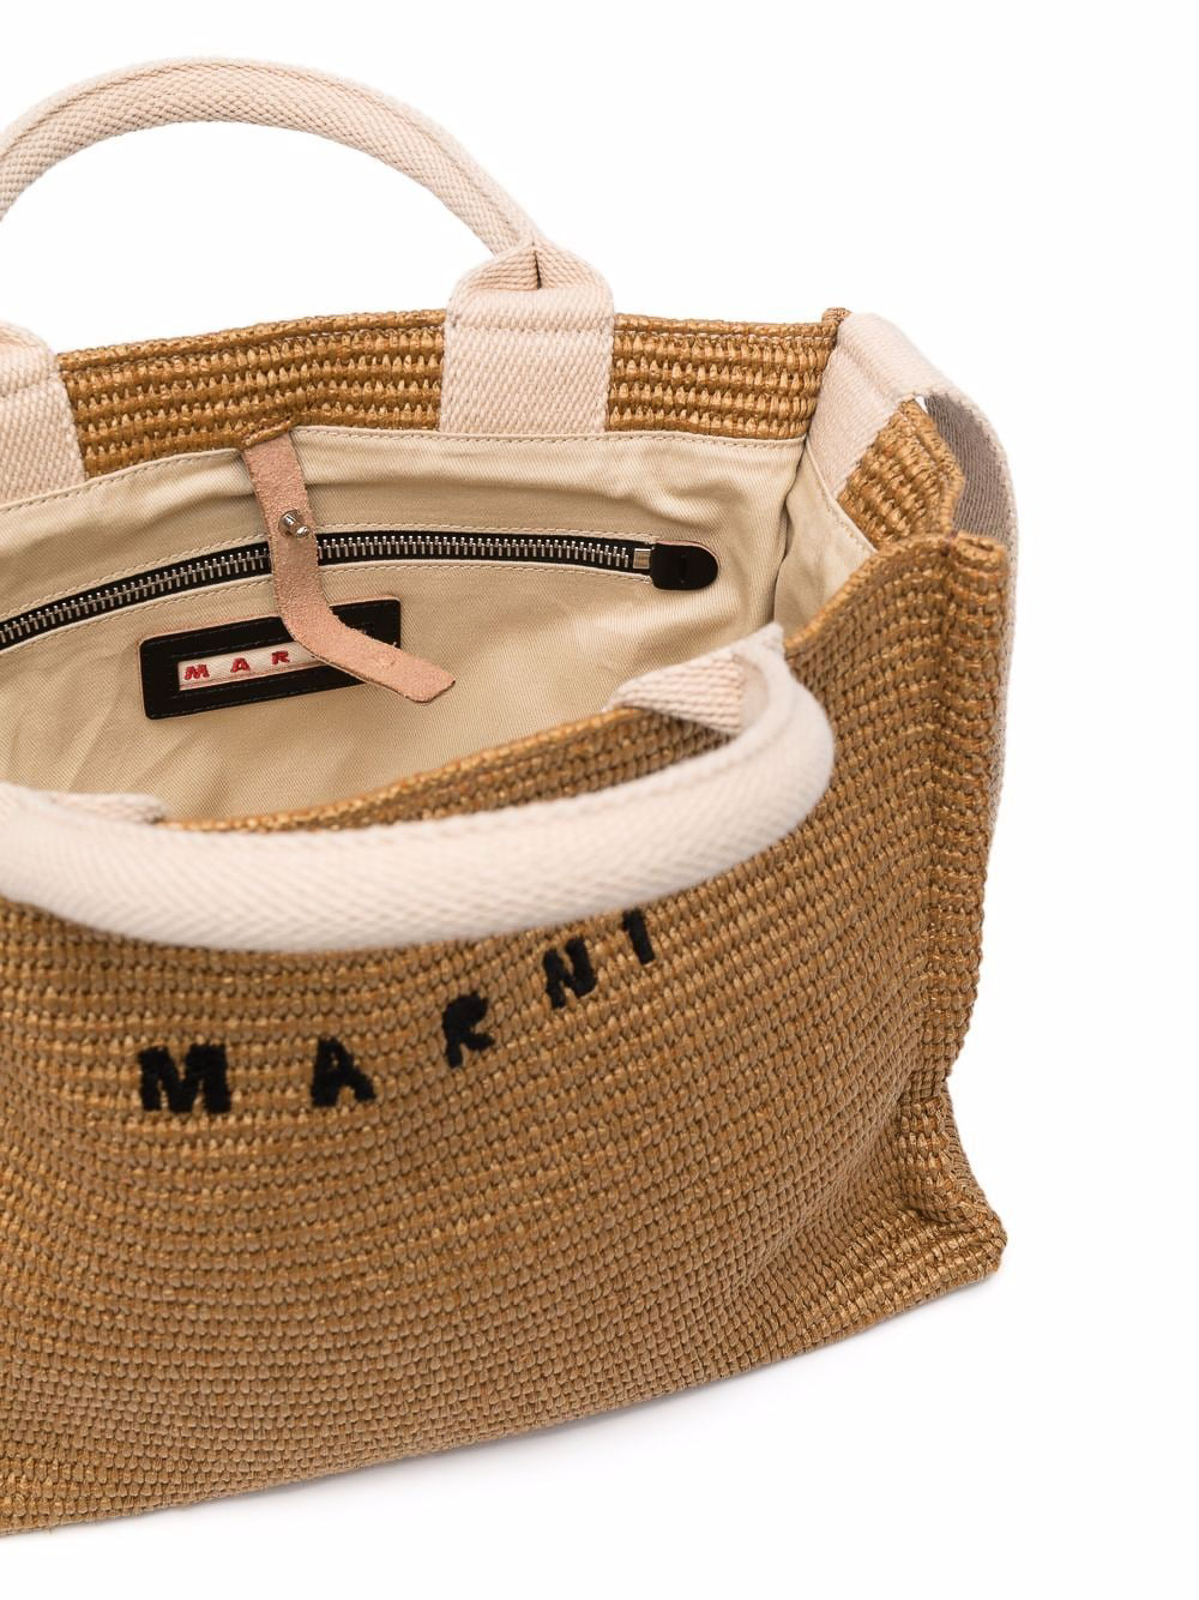 Marni Mini Basket Bucket Bag